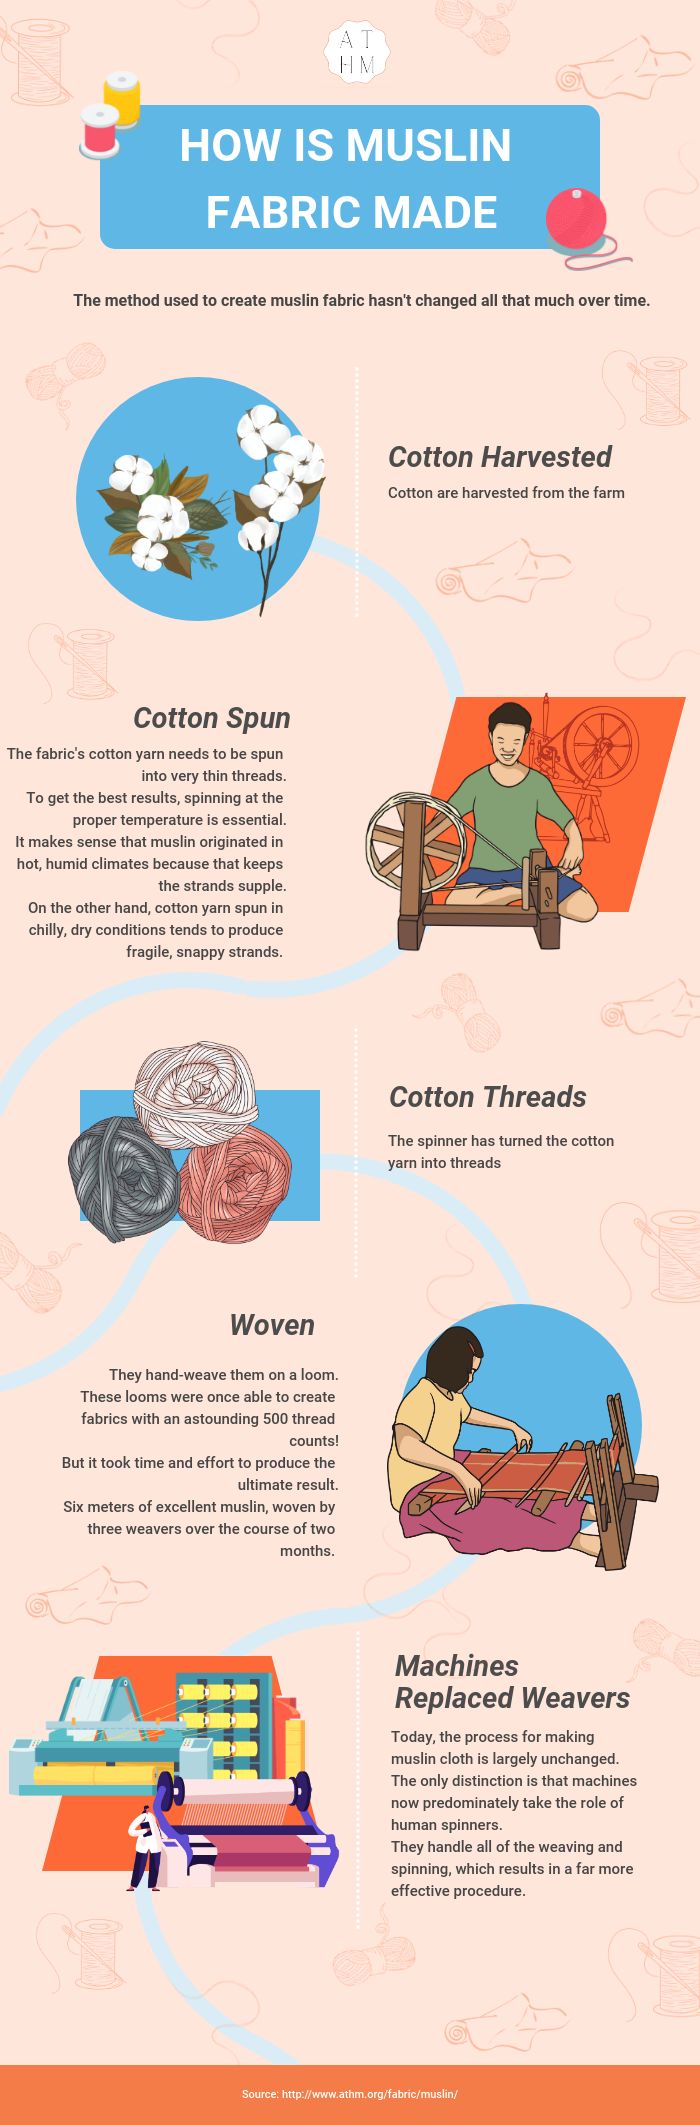 How is Muslin Fabric Made